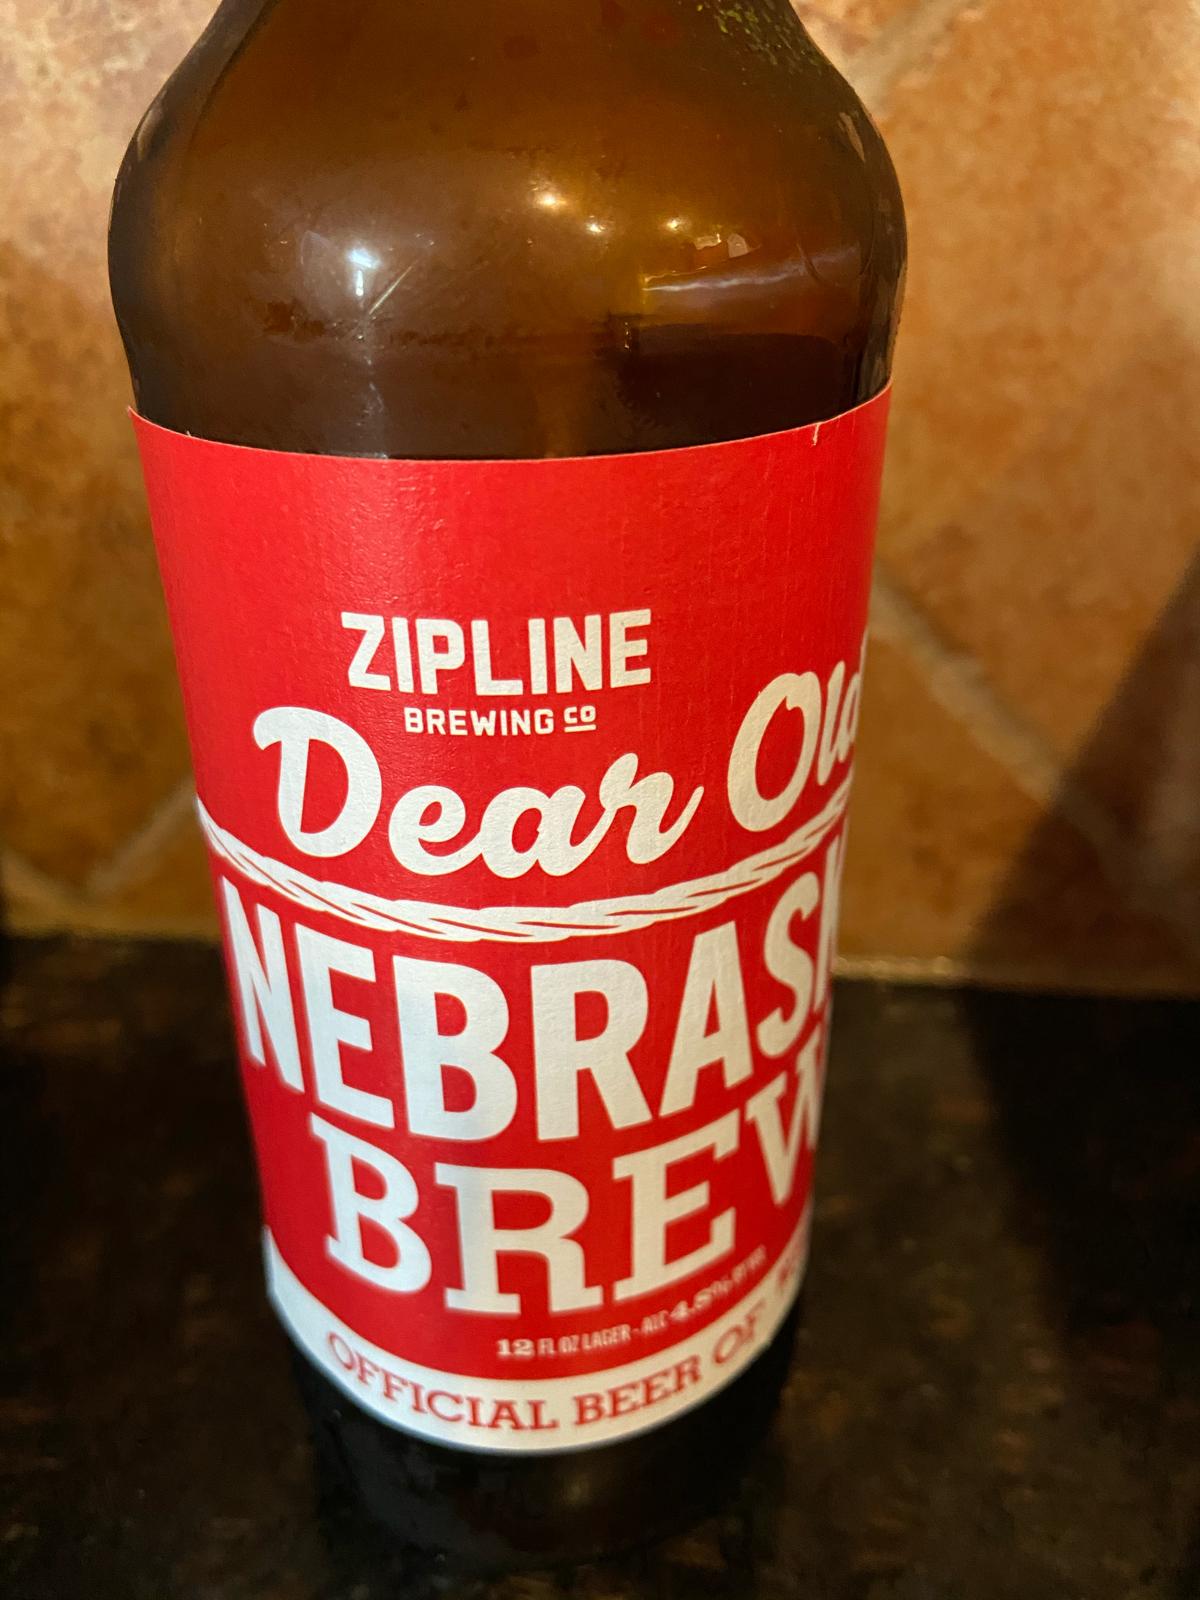 Dear Old Nebraska Brew